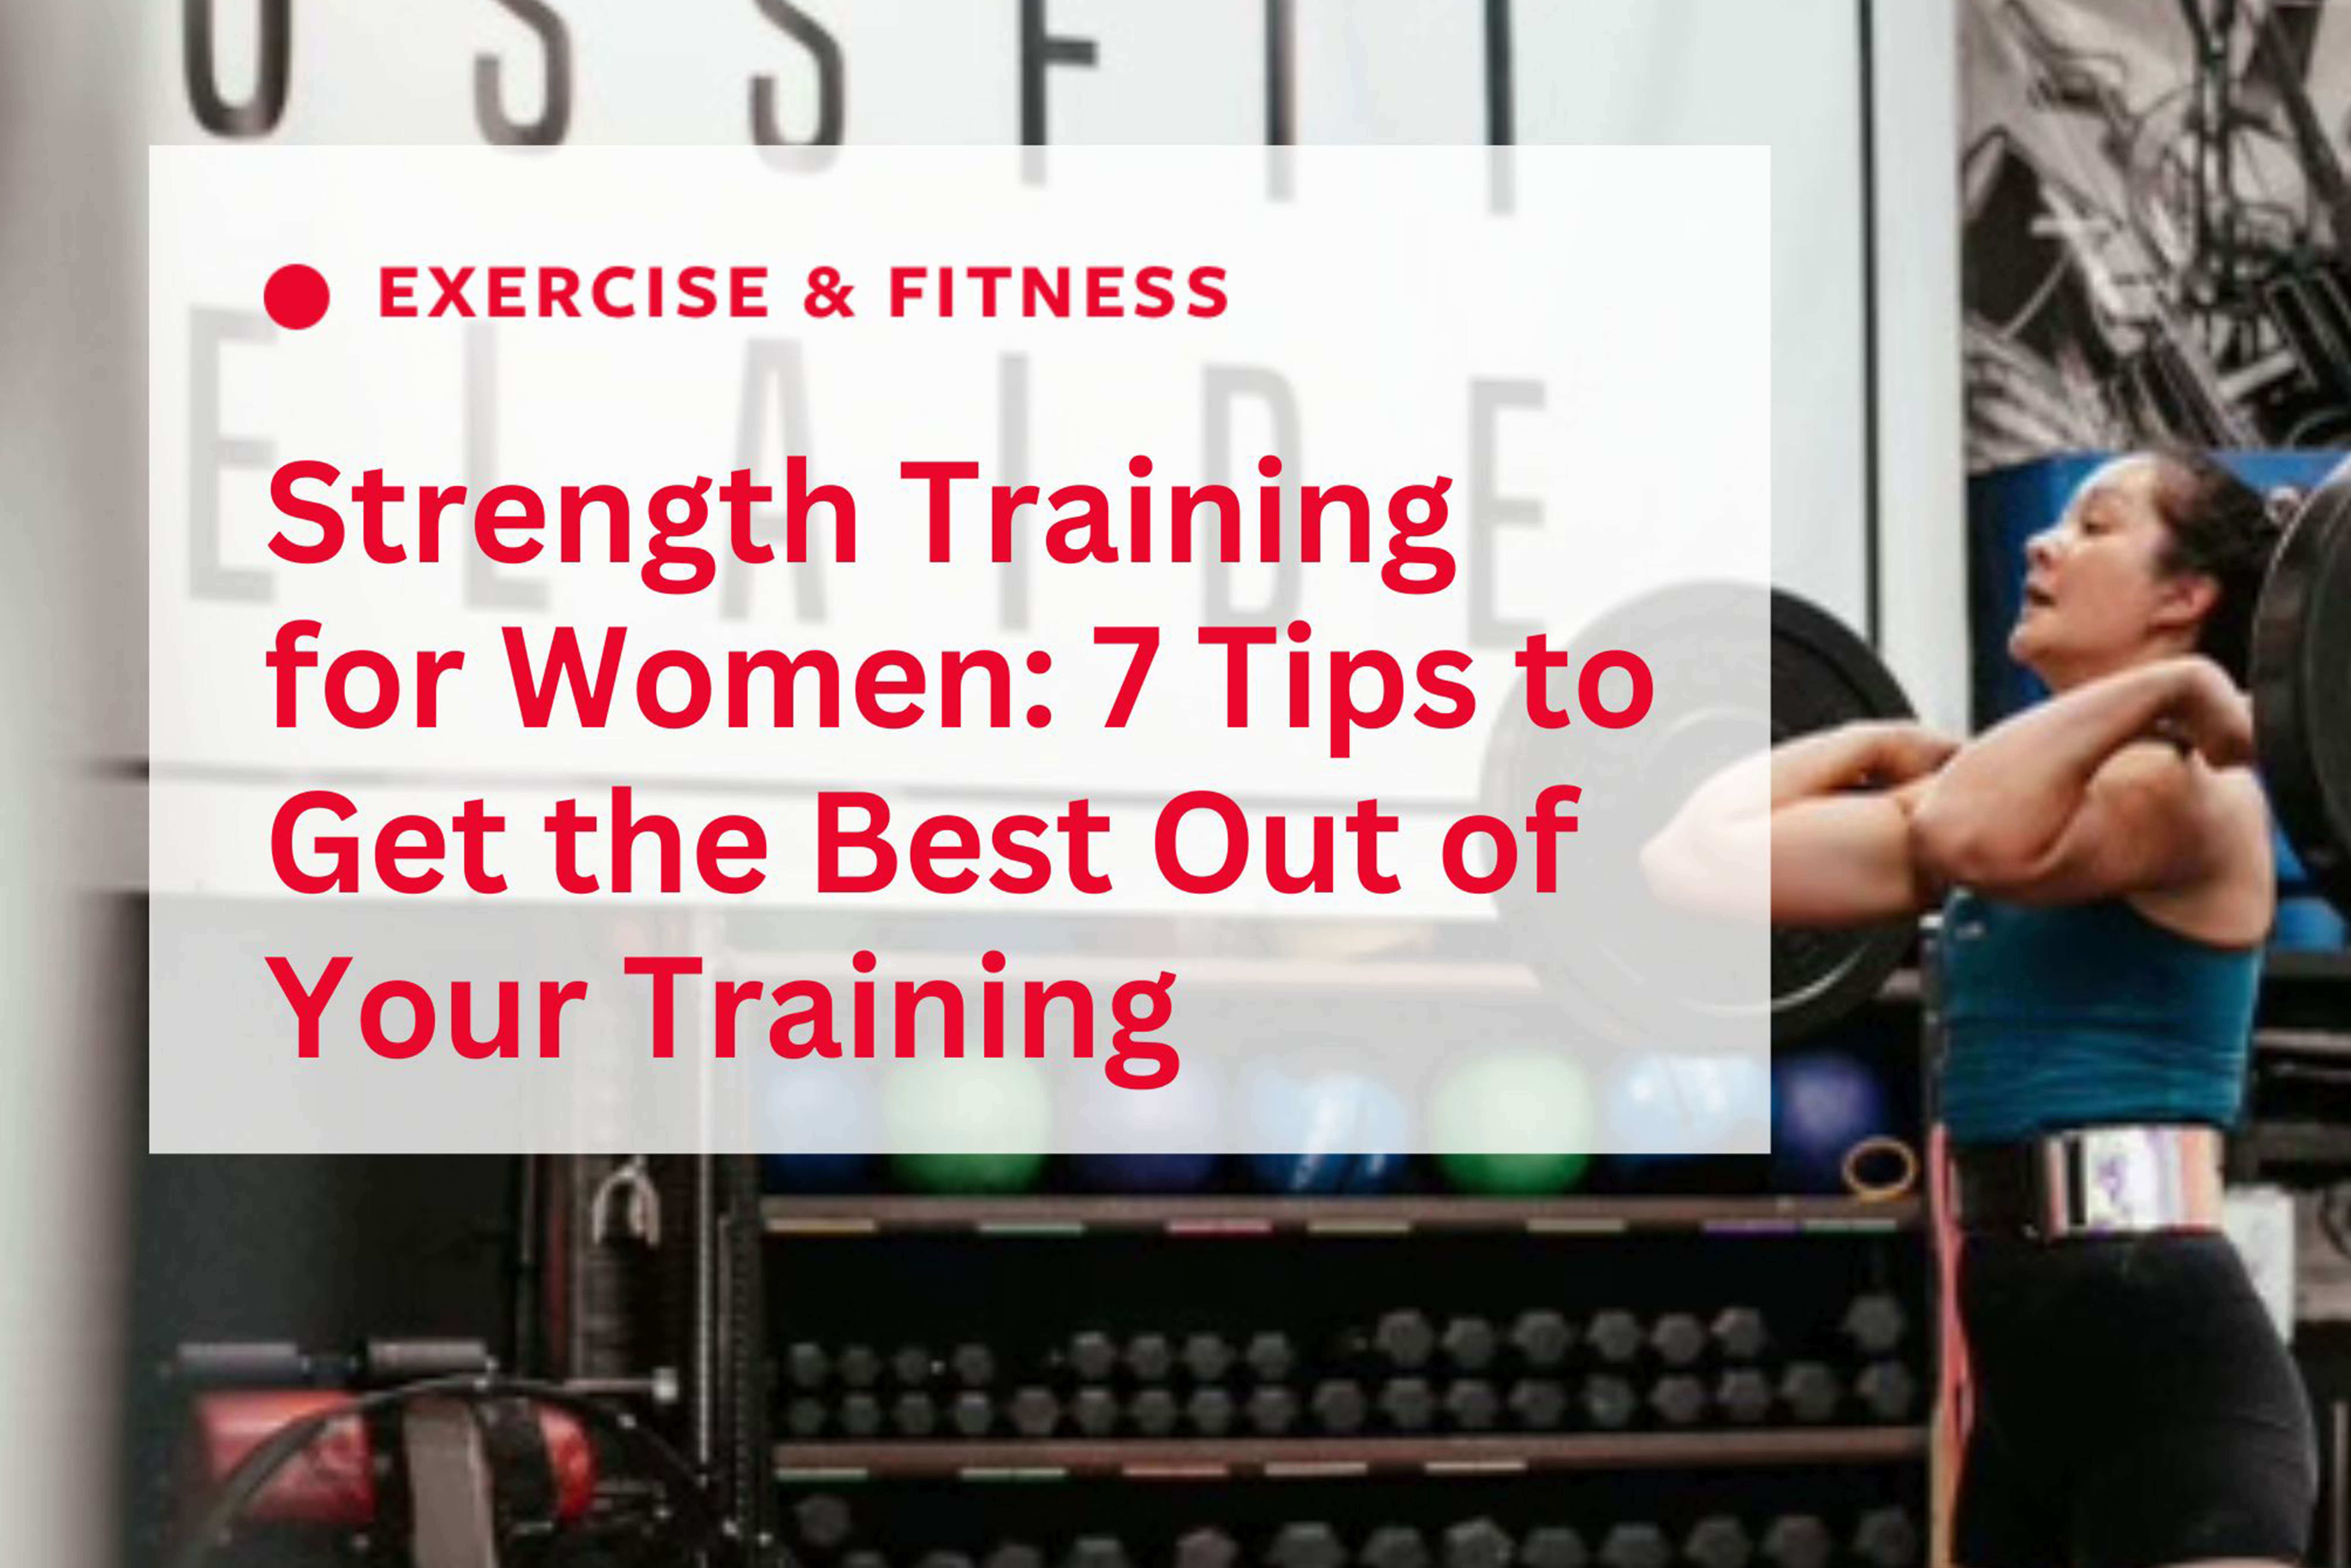 Strength training for women is key for optimal health.